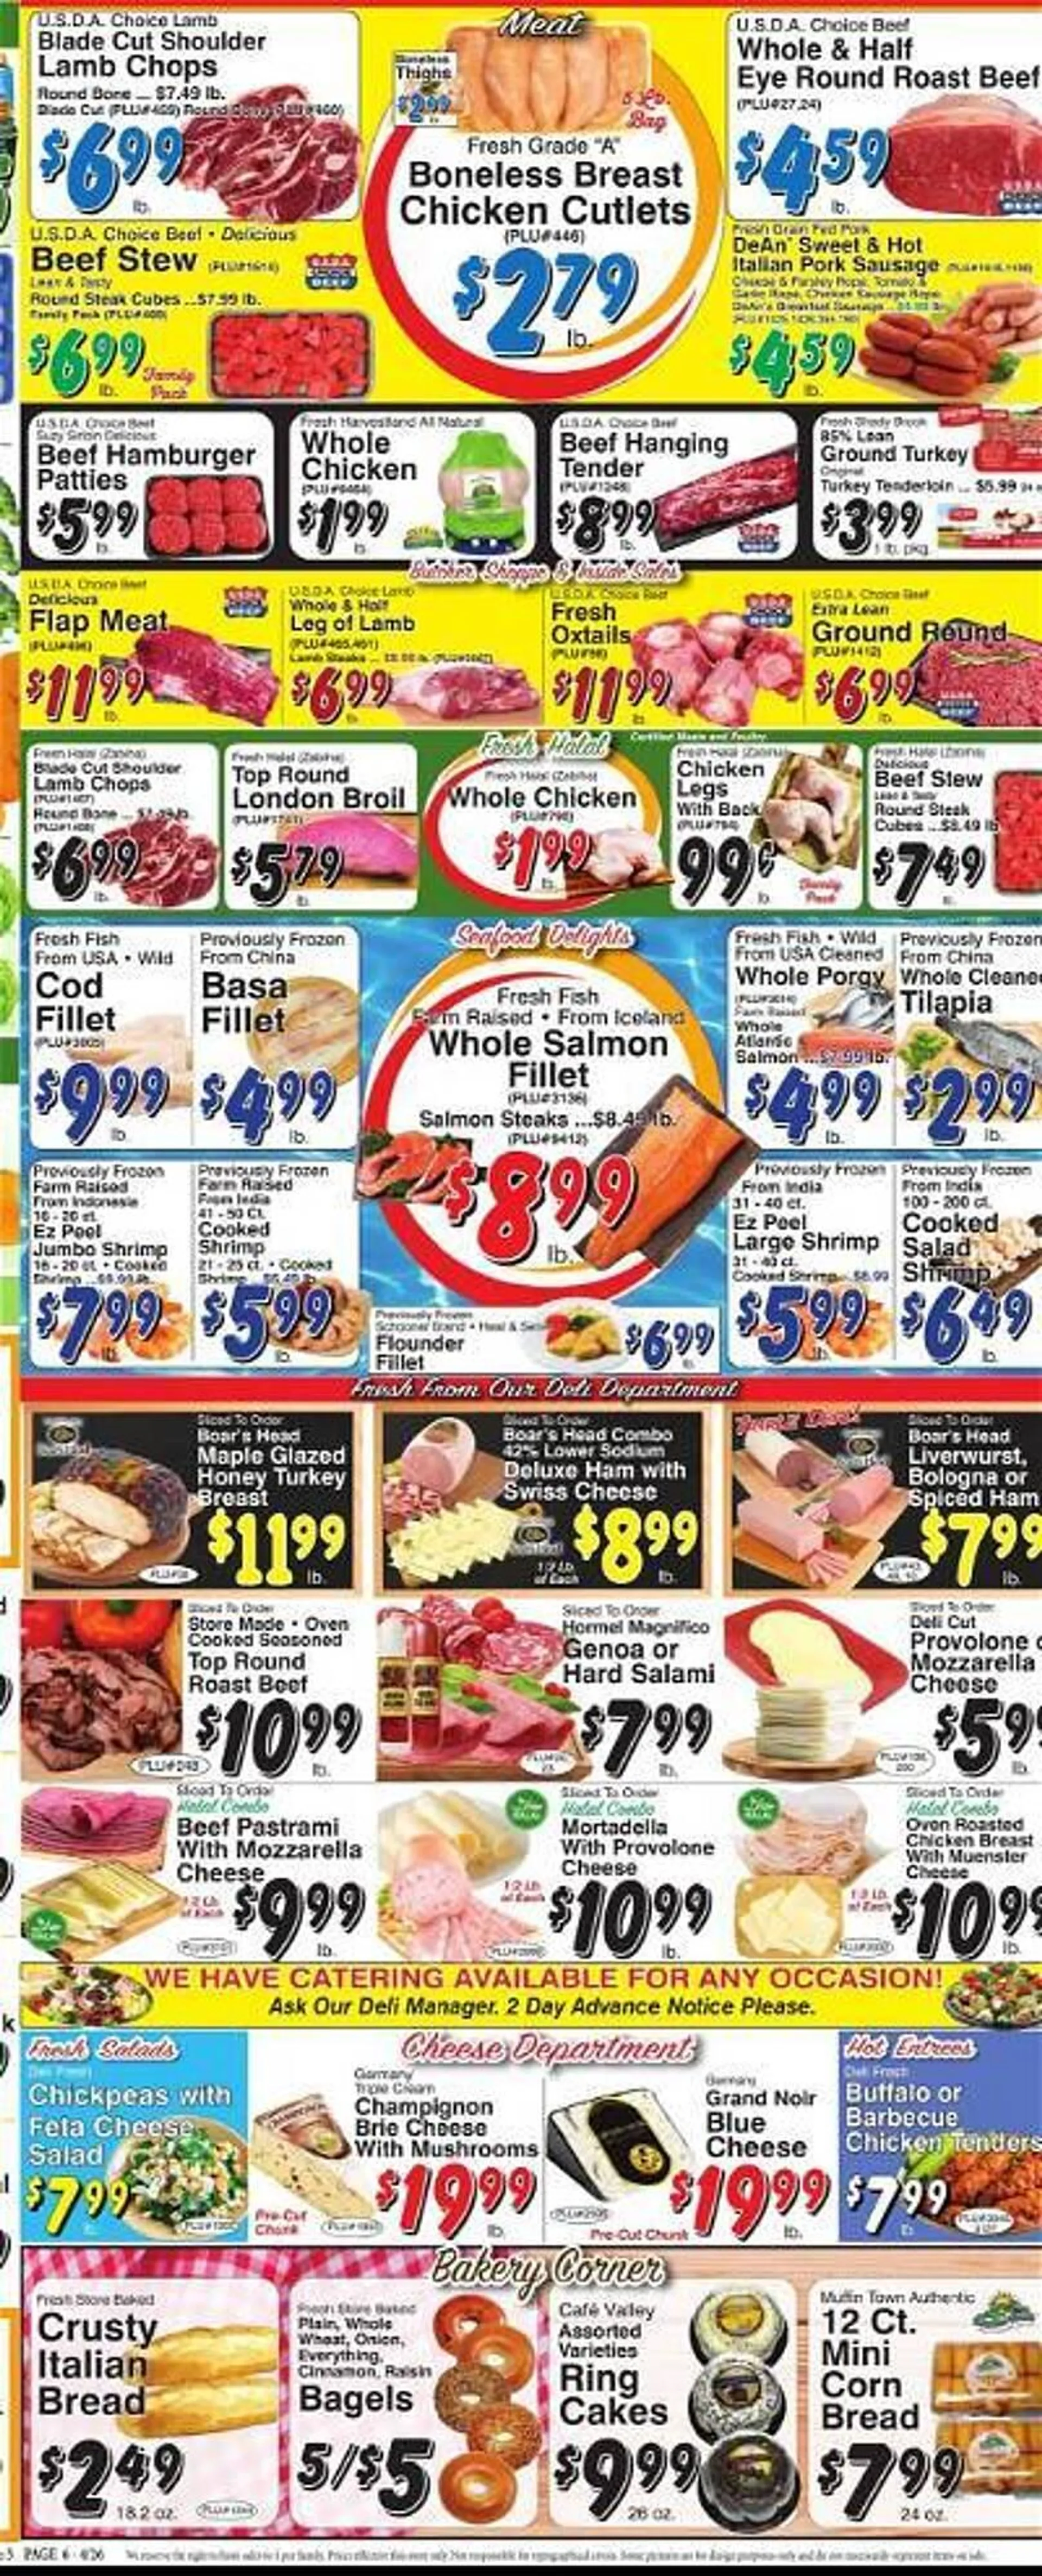 Trade Fair Supermarket Weekly Ad - 6